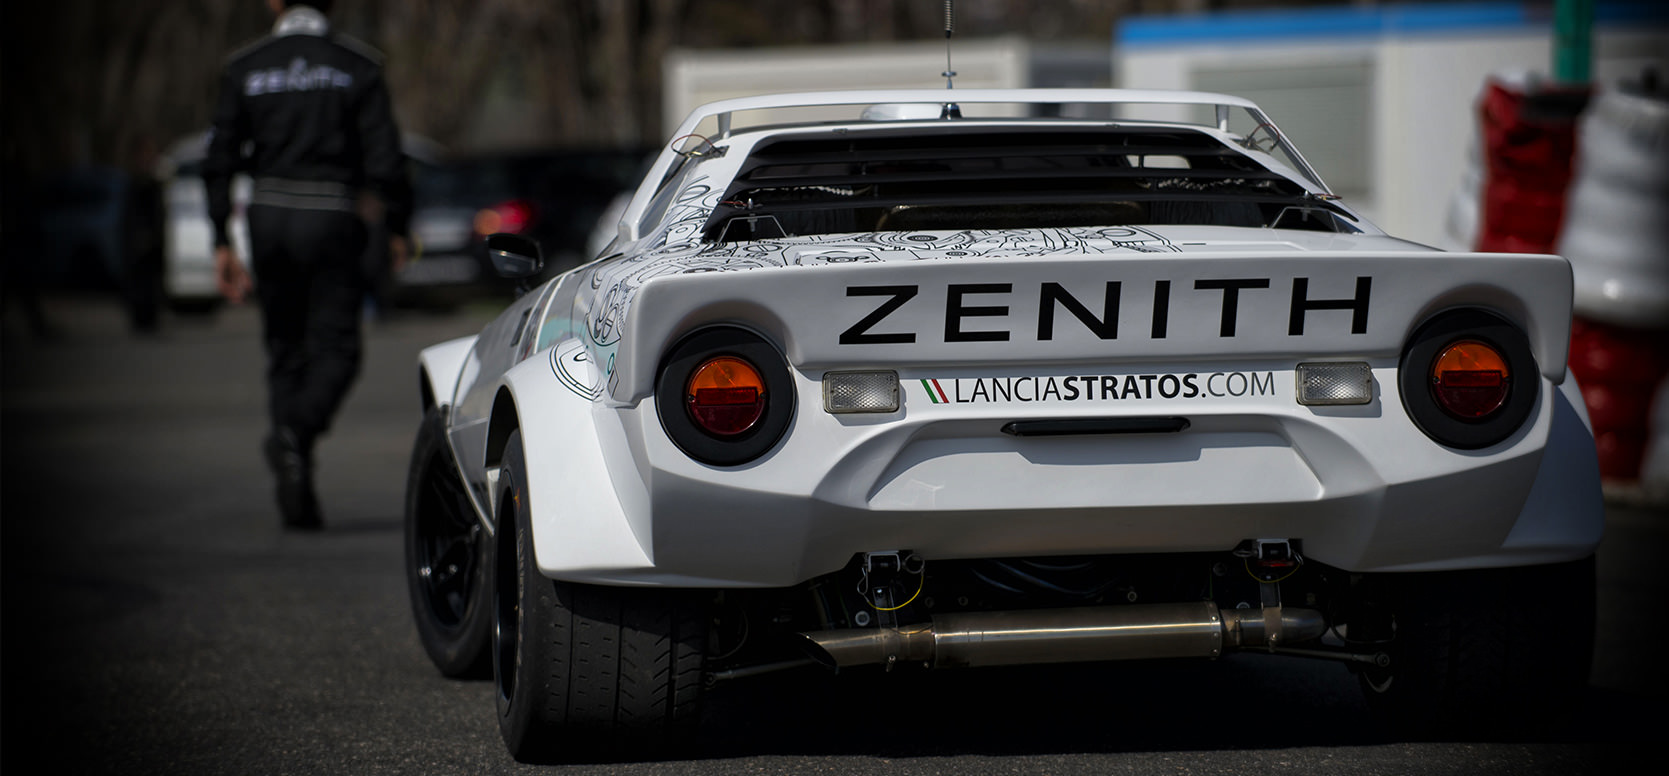 Lancia Stratos Zenith posteriore